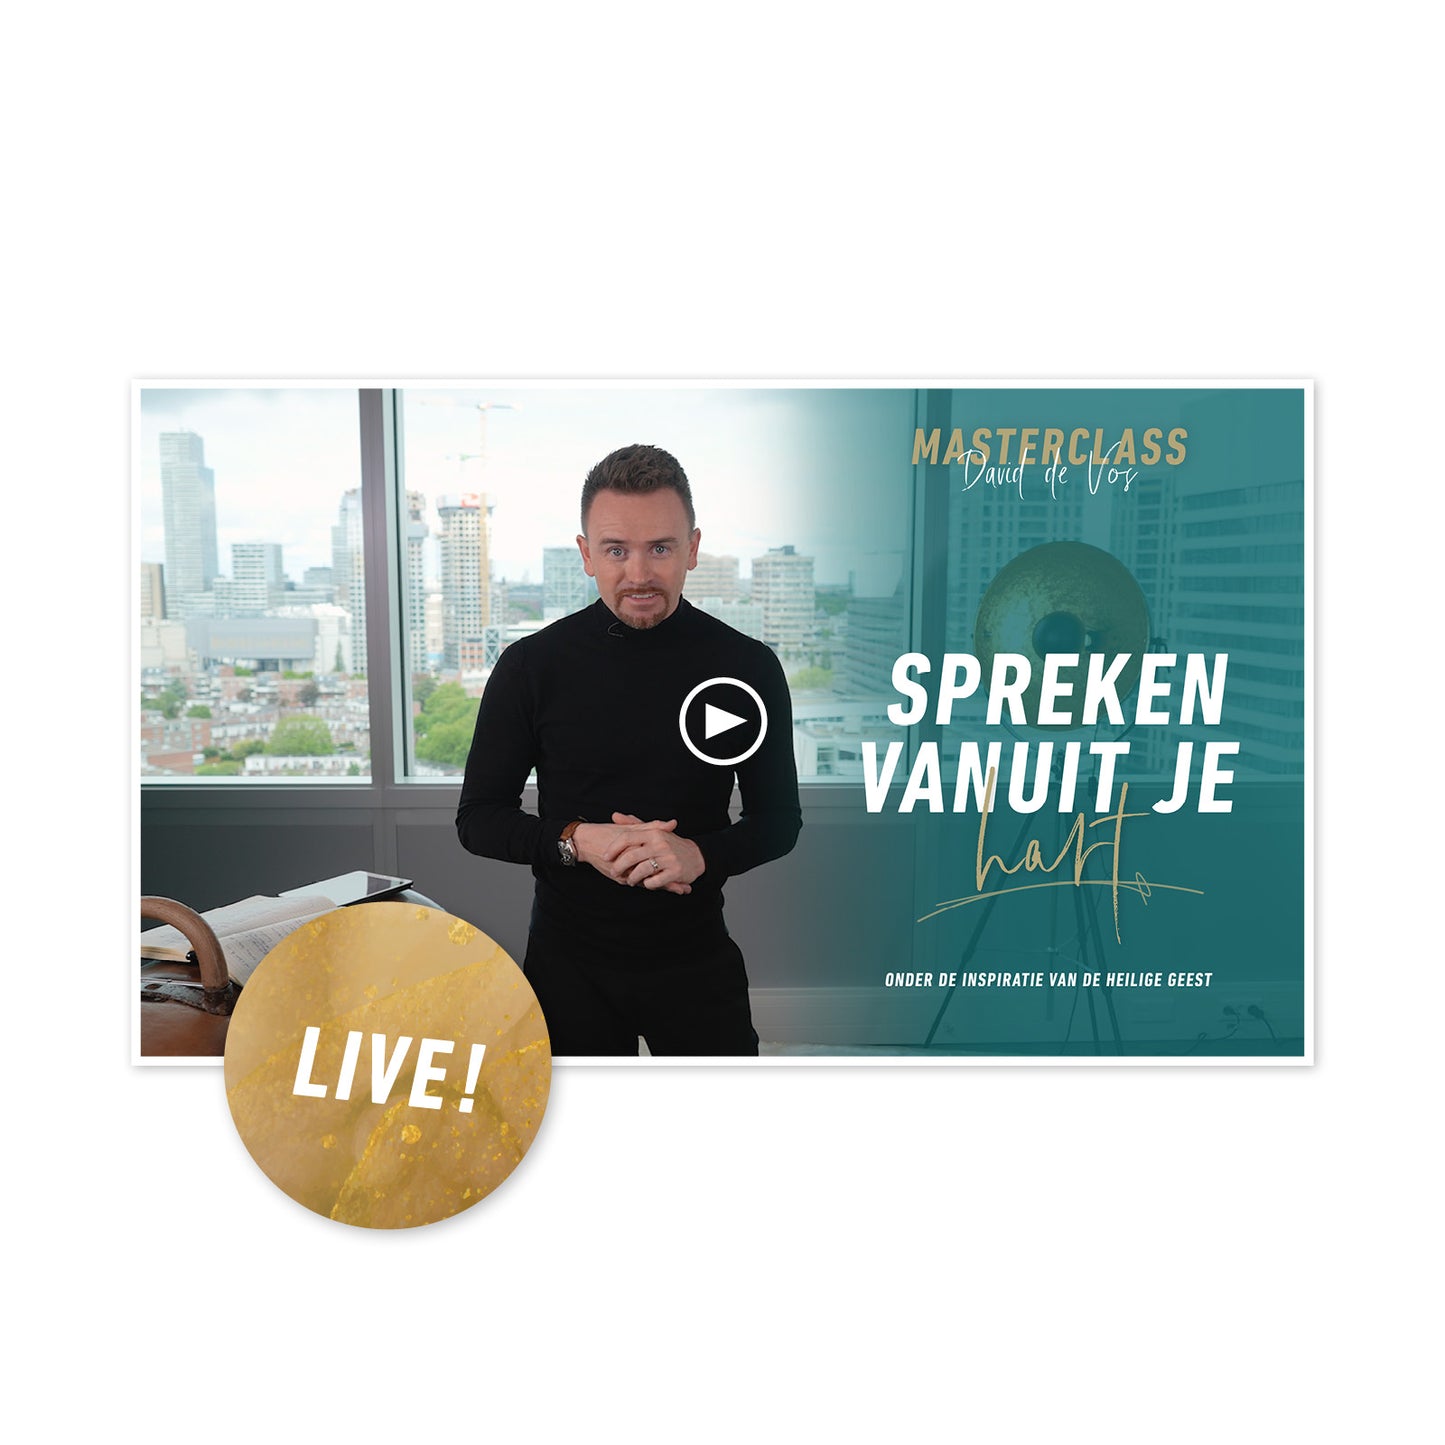 Live Masterclass 'Spreken vanuit je hart'